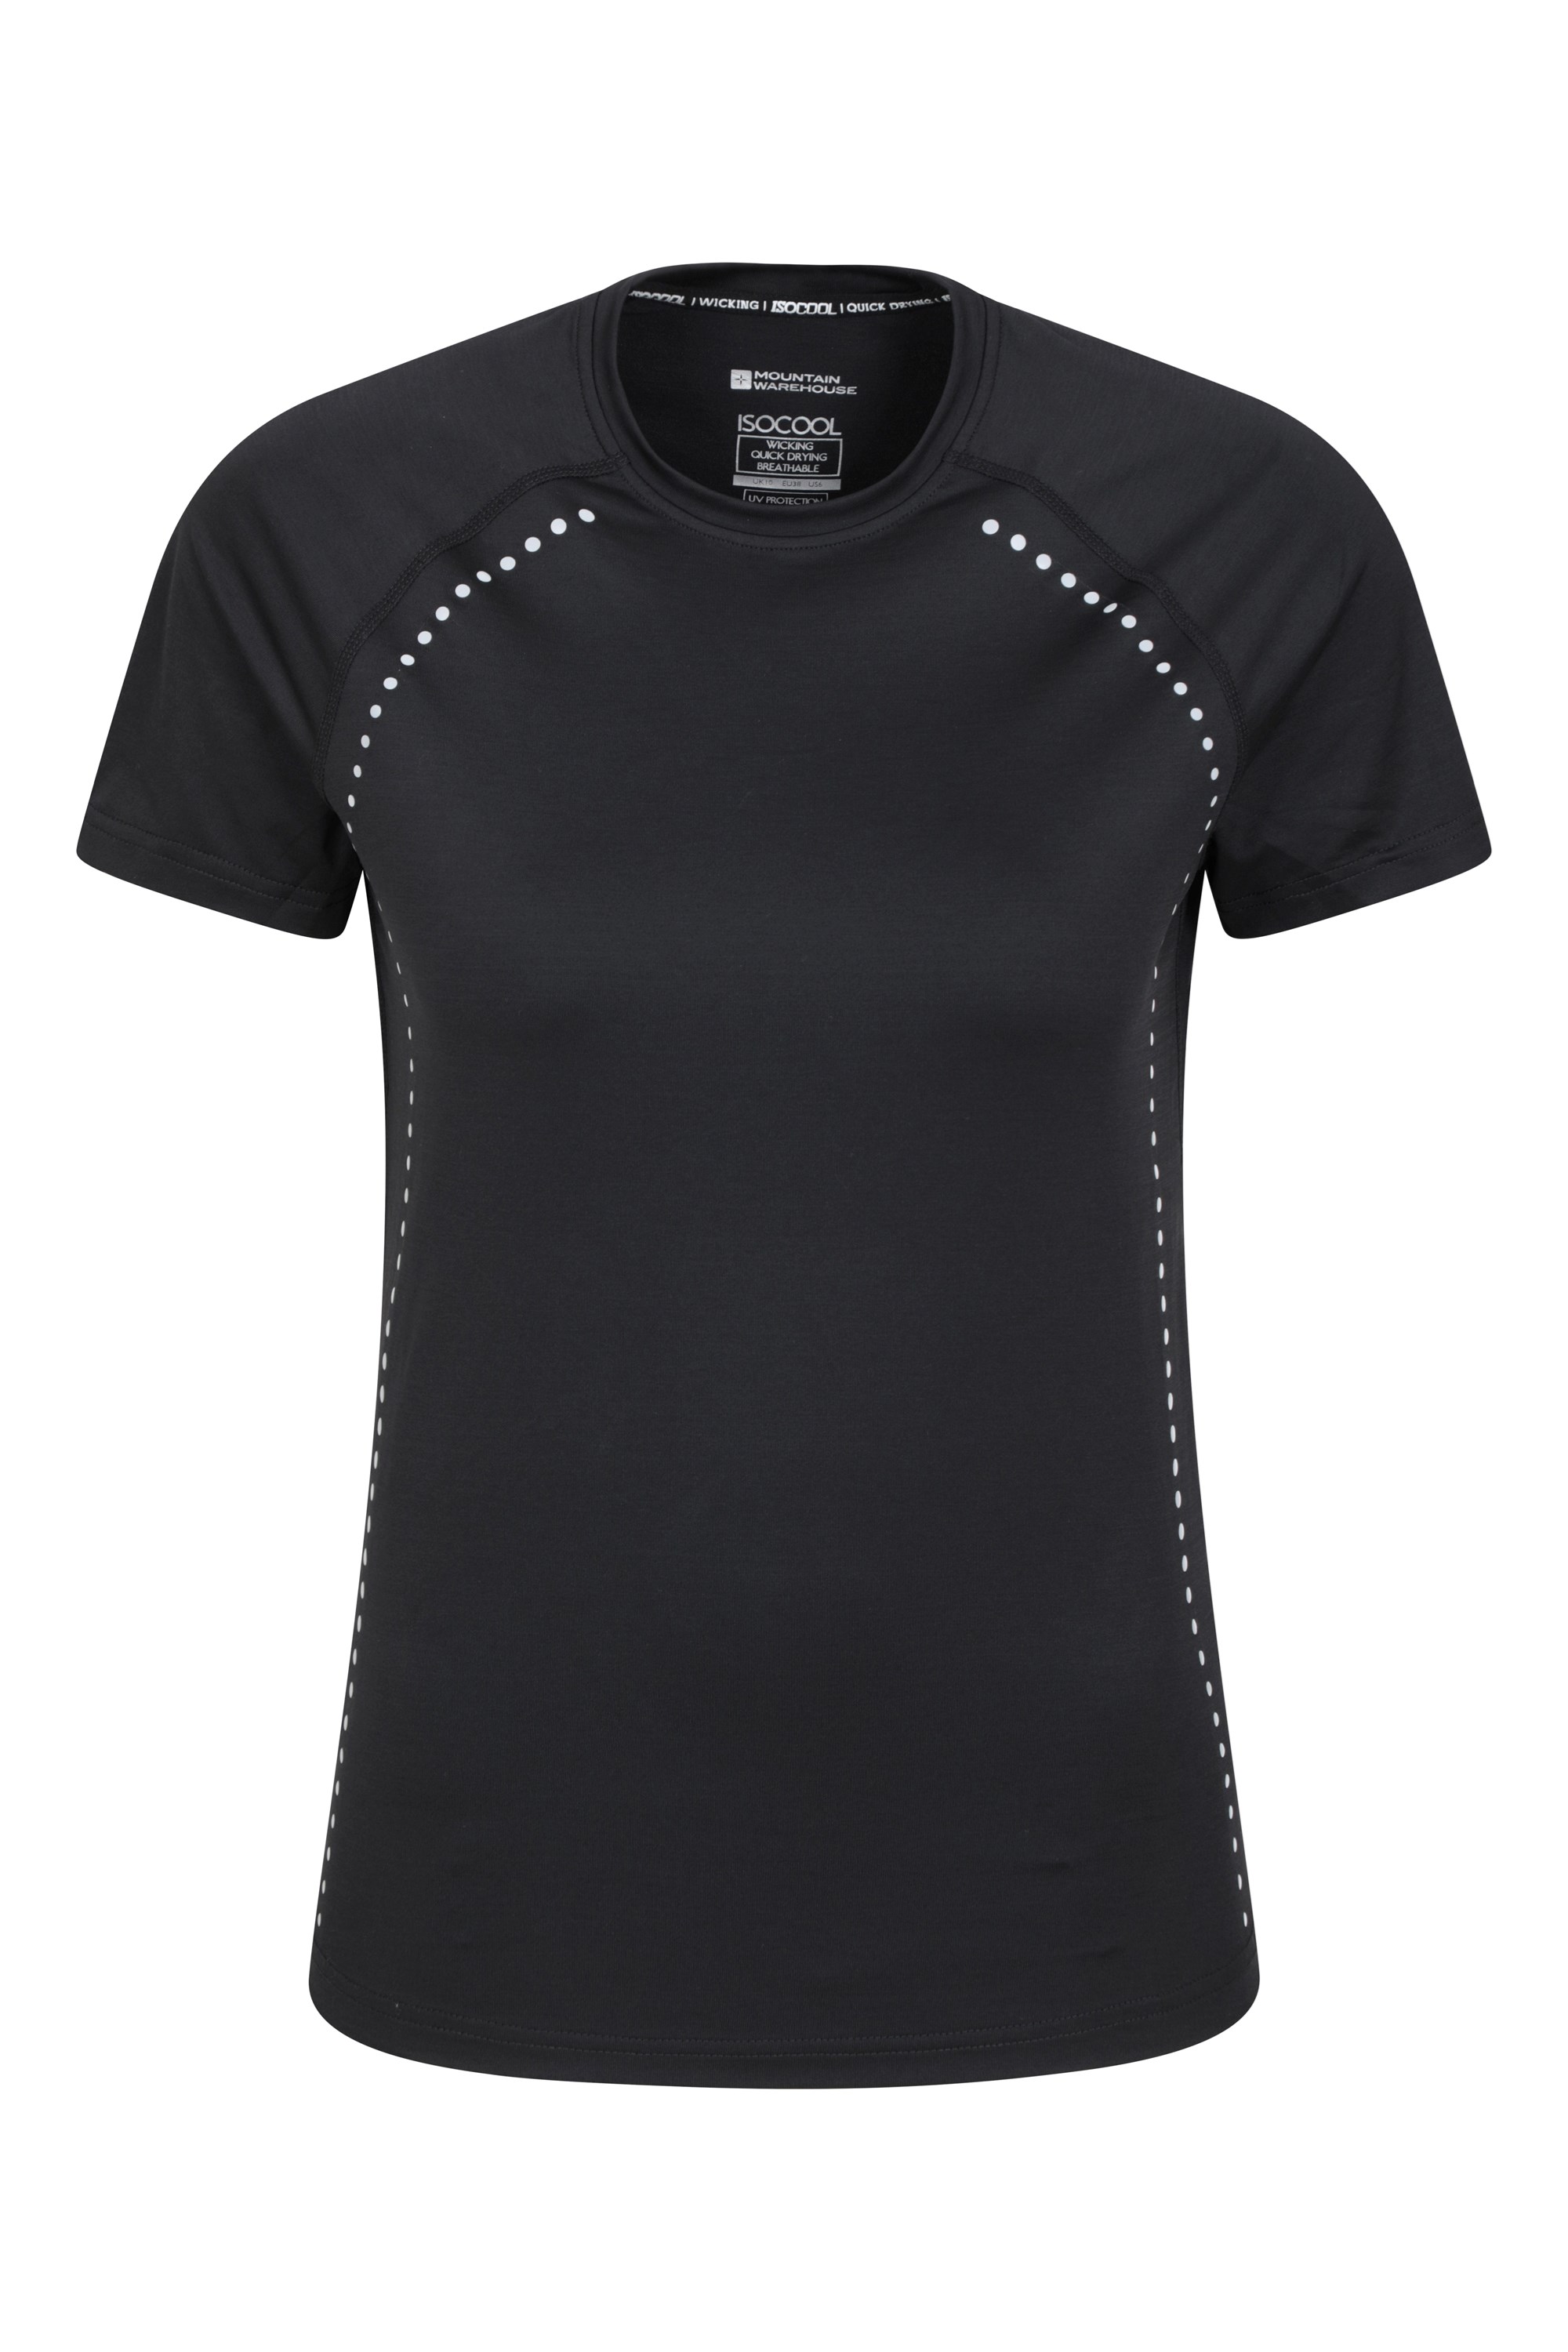 Time Trial Womens Running T-Shirt - Black